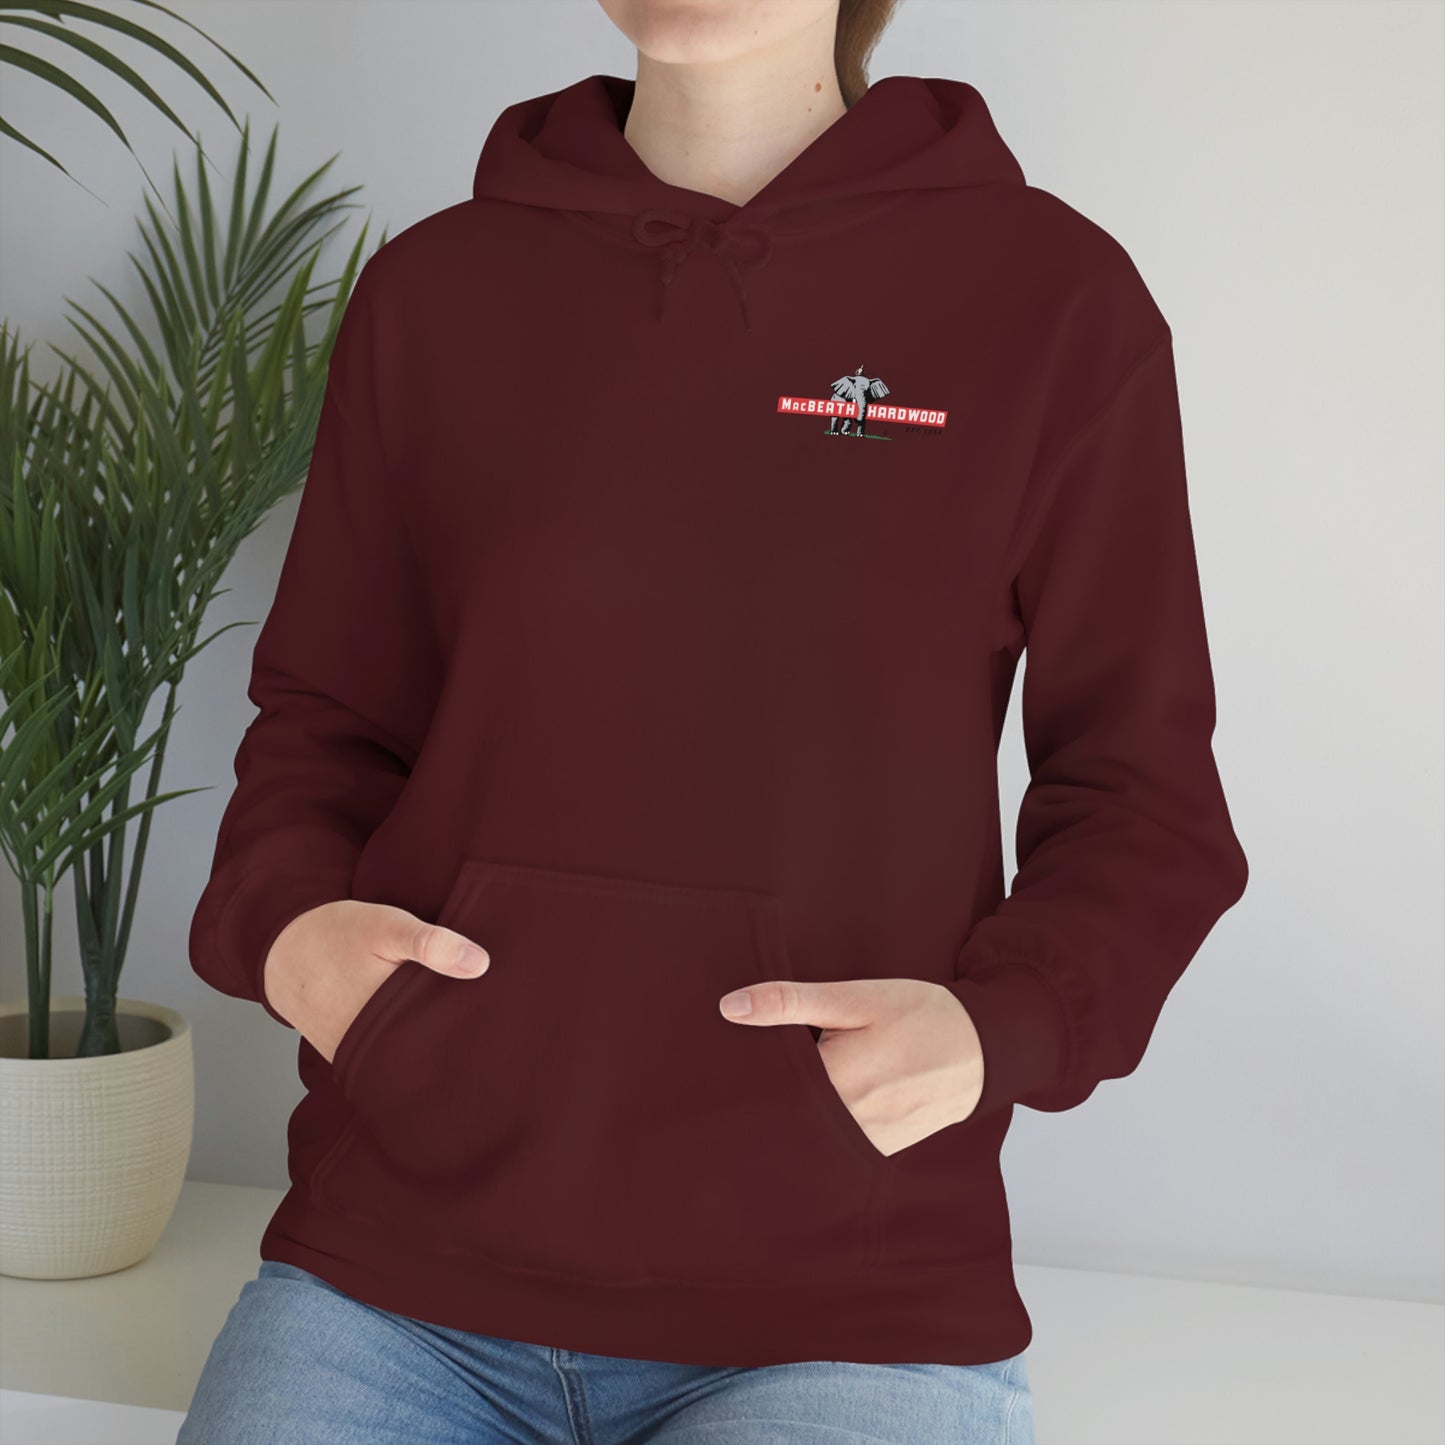 MacBeath Hardwood Heavy Blend Hooded Sweatshirt - Left Chest Logo